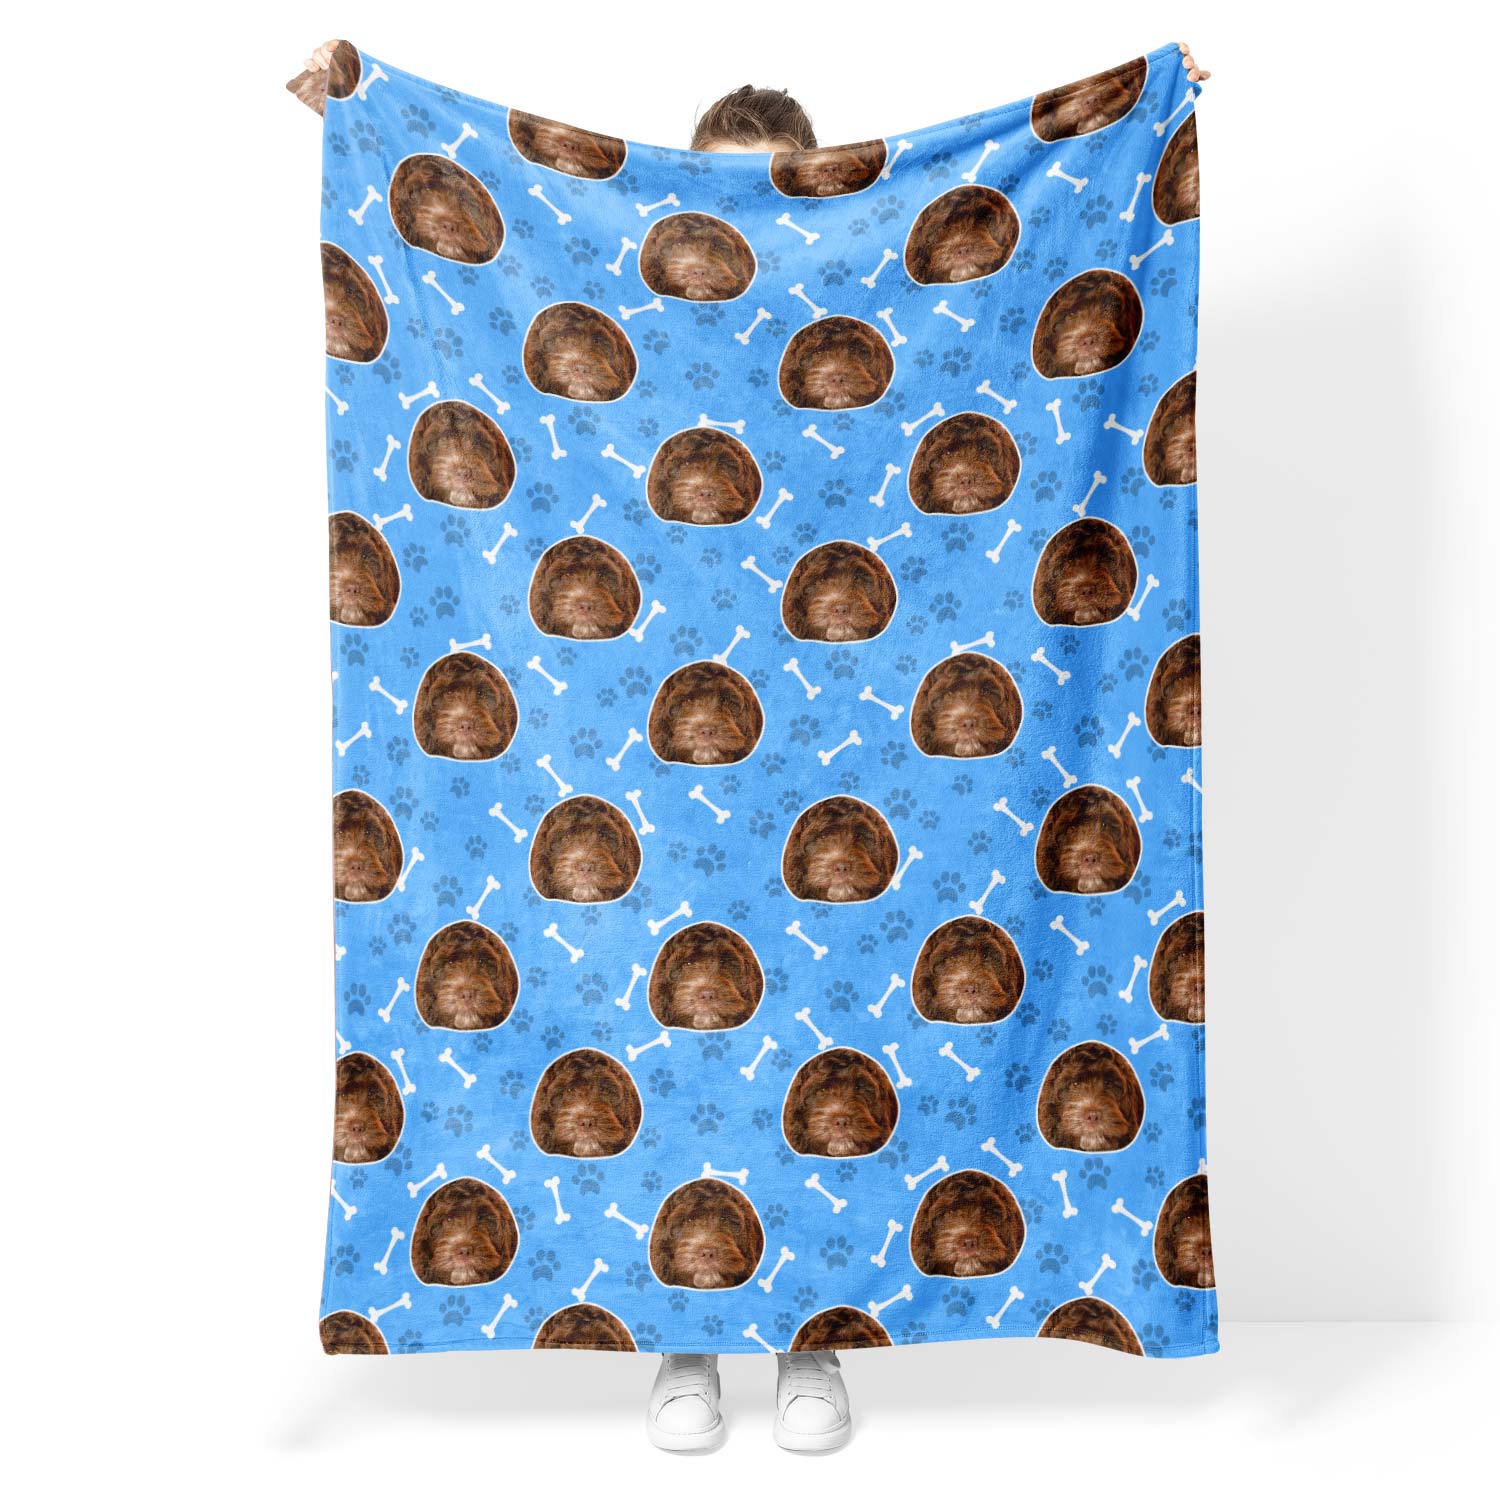 Personalised Dog Blanket